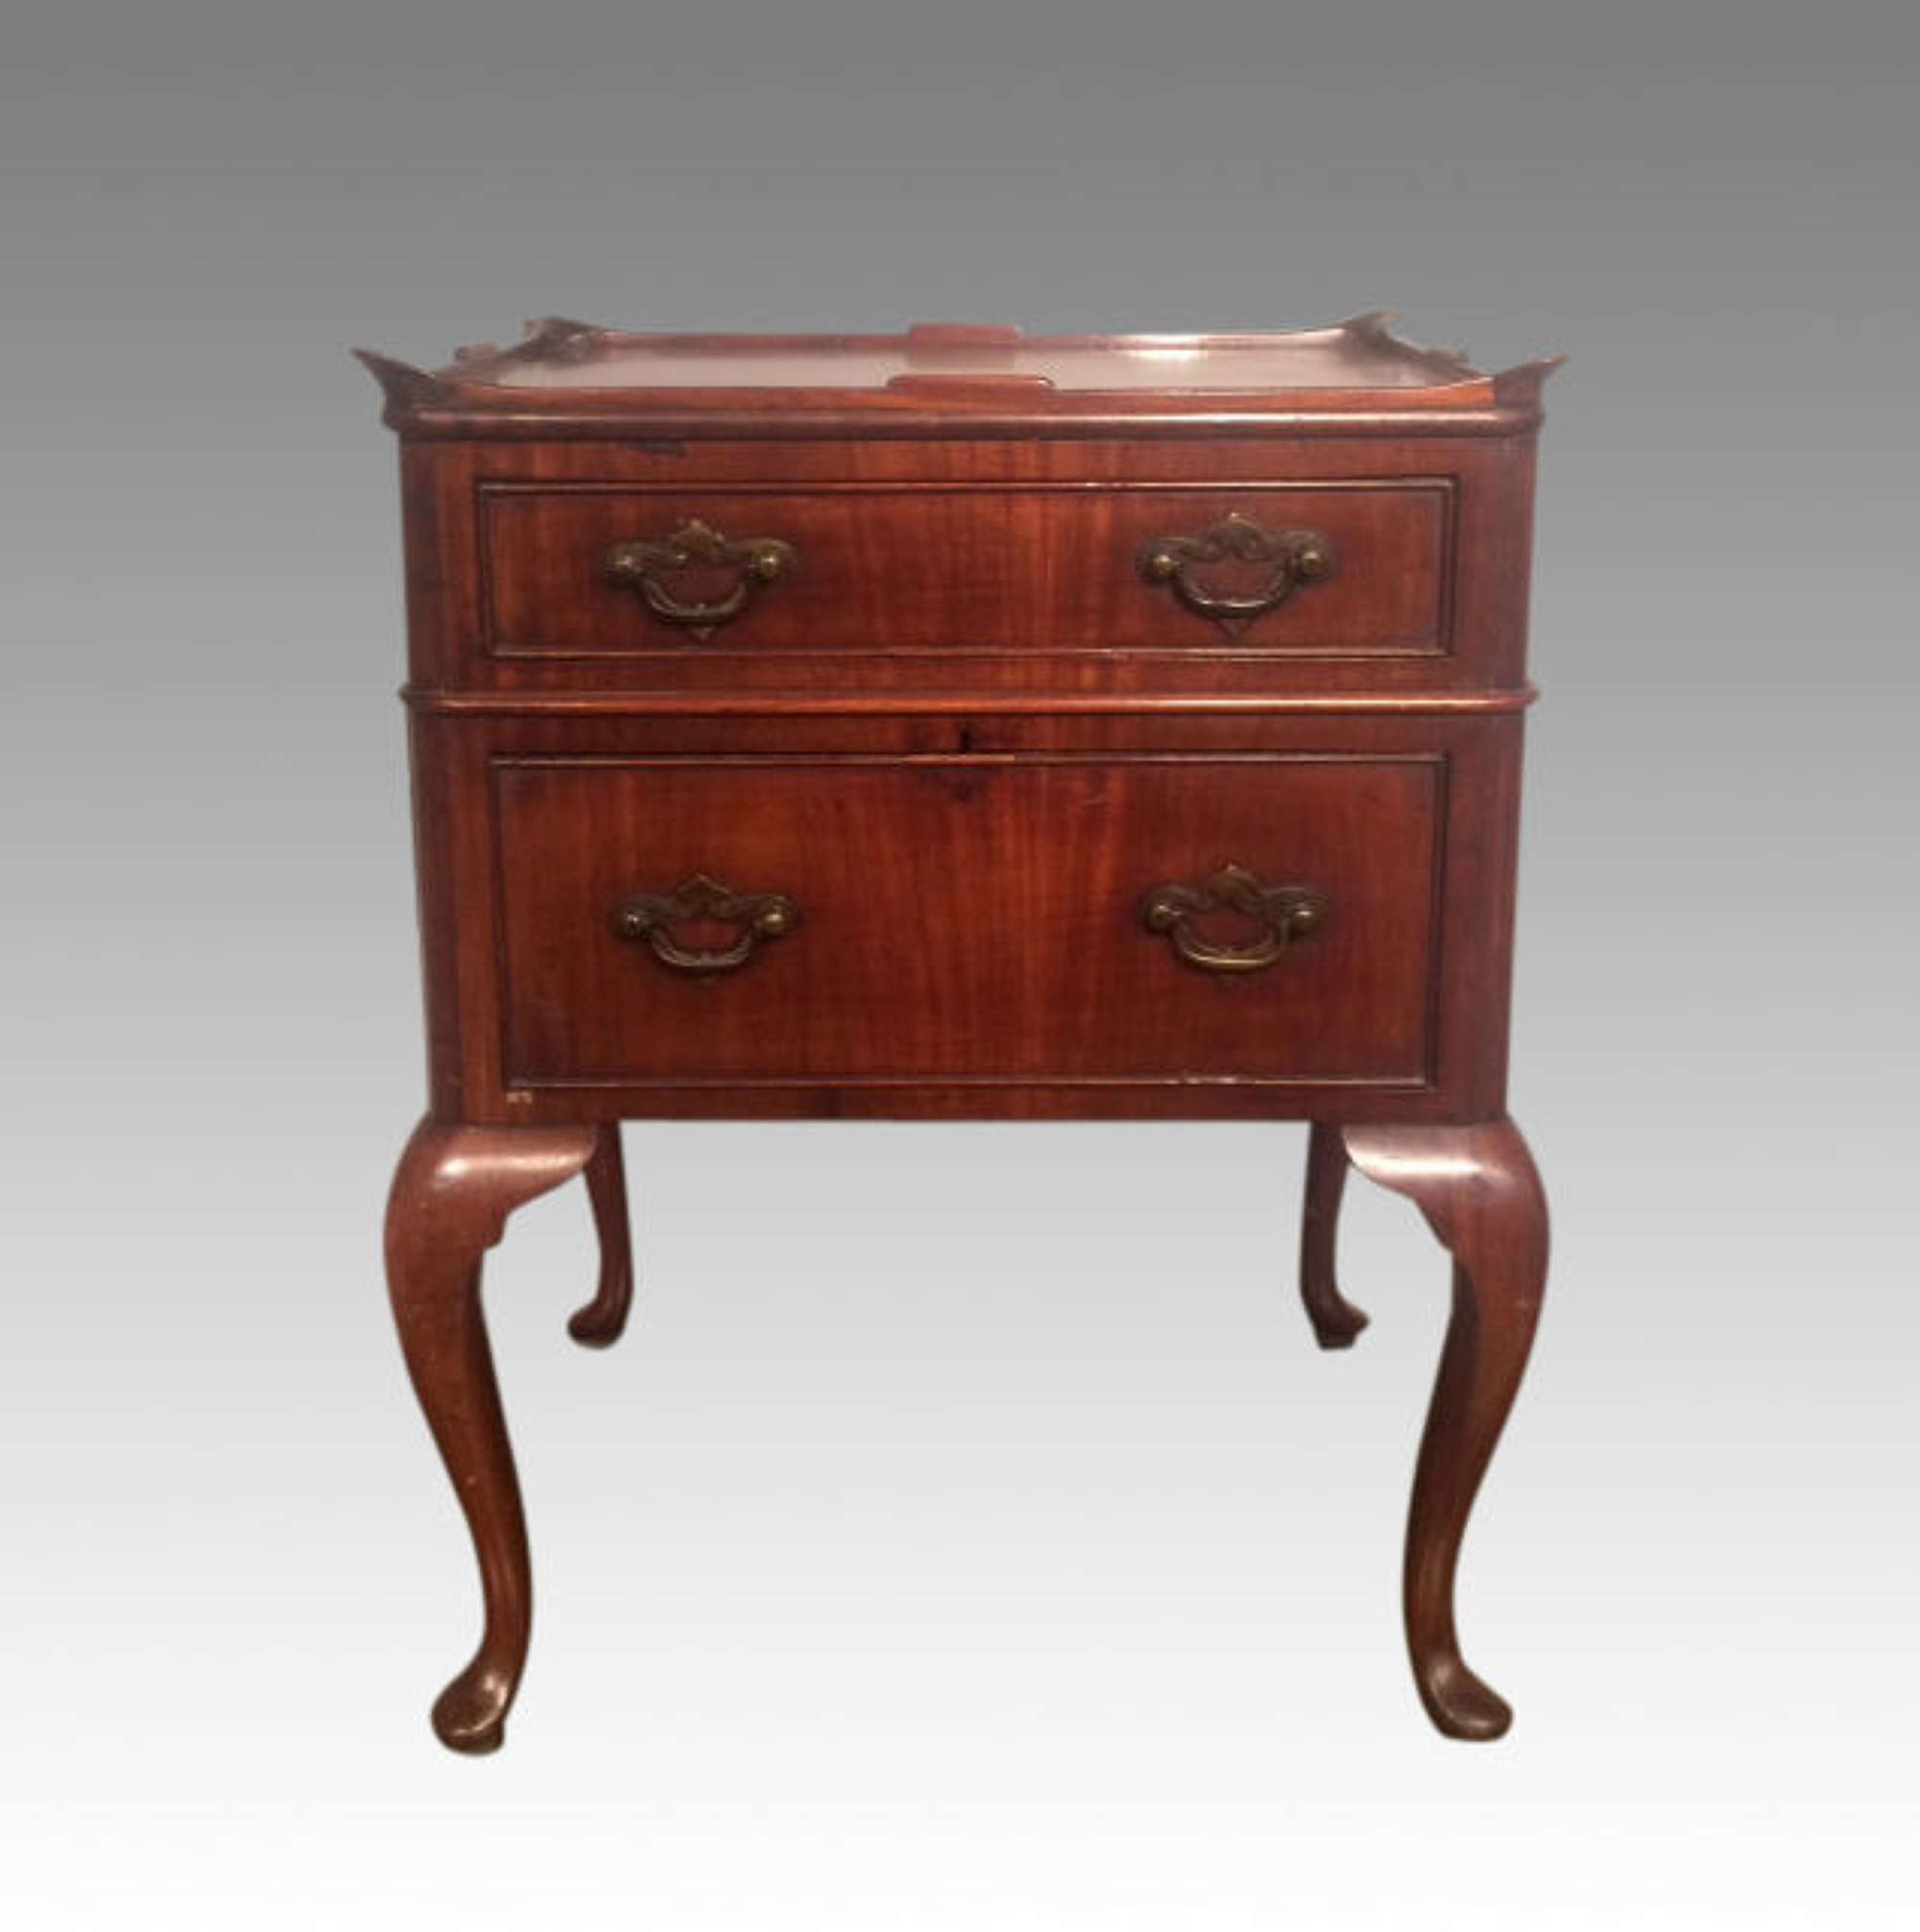 19th century antique mahogany cabriole leg bedside table